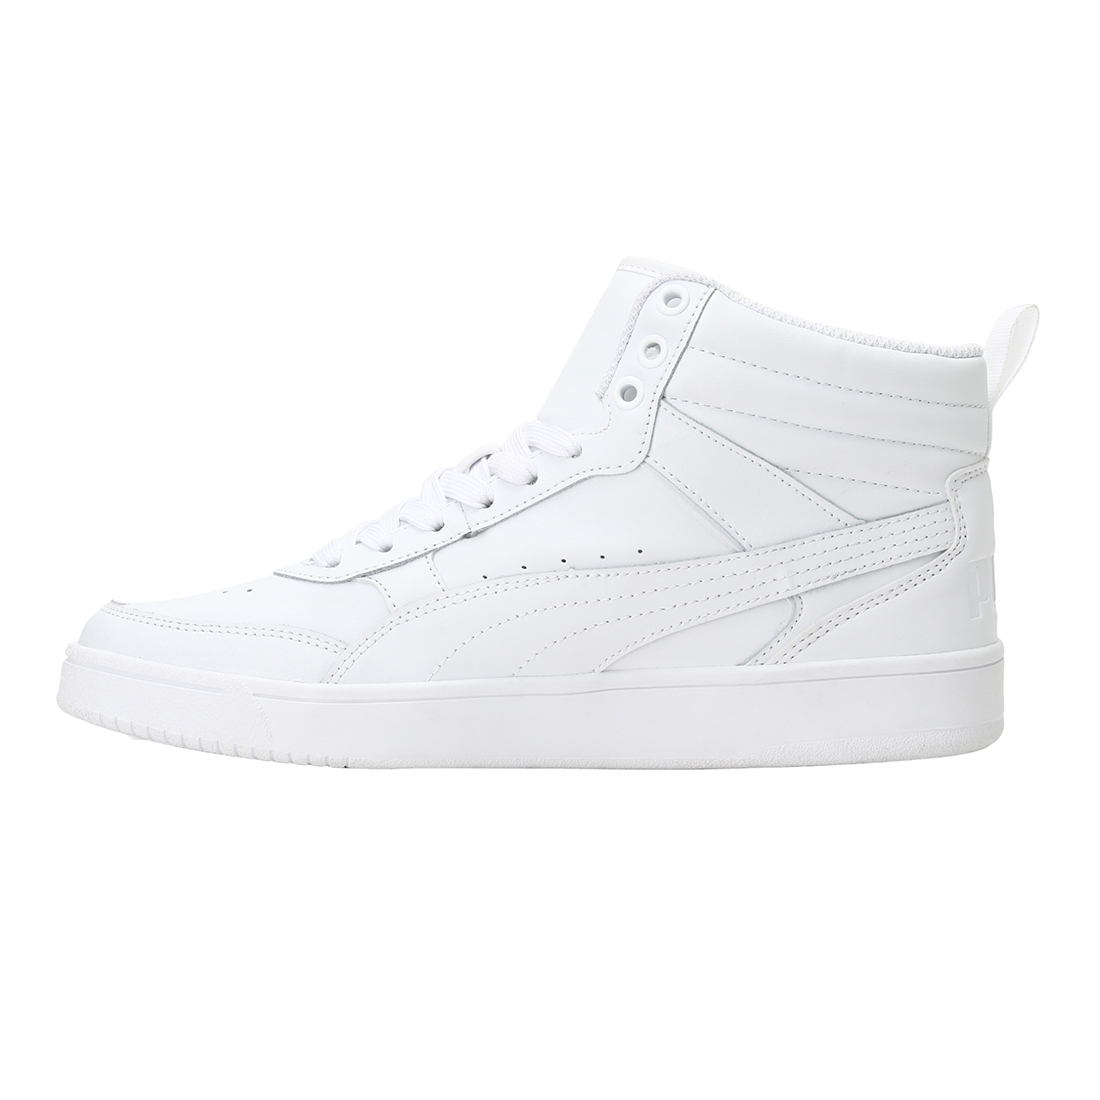 Buy Puma Rebound Street v2 Unisex White Casual Shoes online